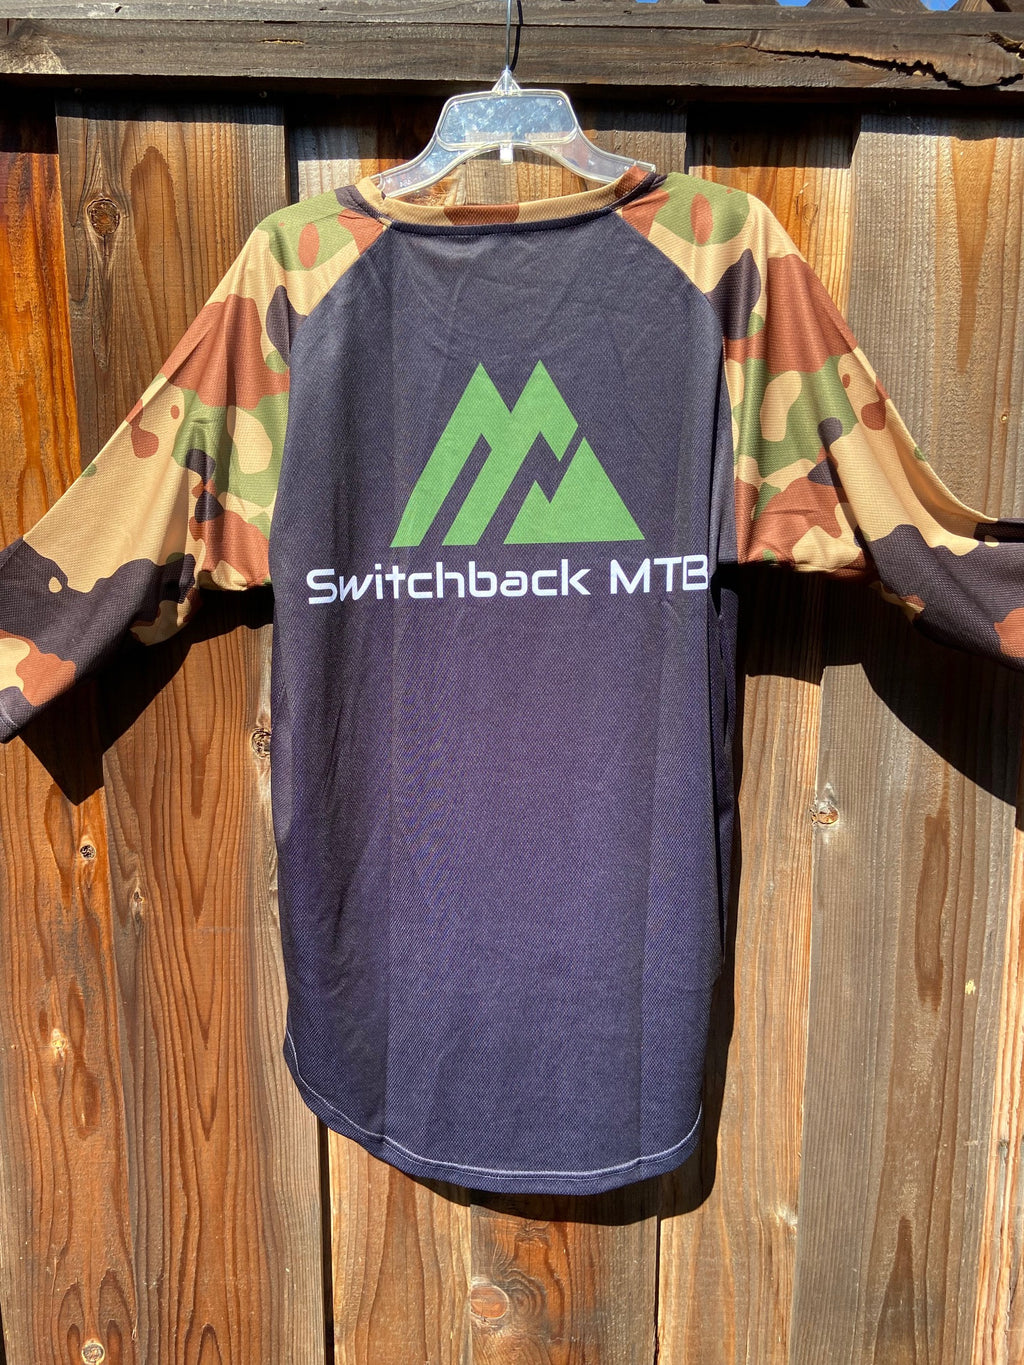 Switchback MTB Mountain Storm Performance Tech Raglan Jersey w/ 3/4 sleeves